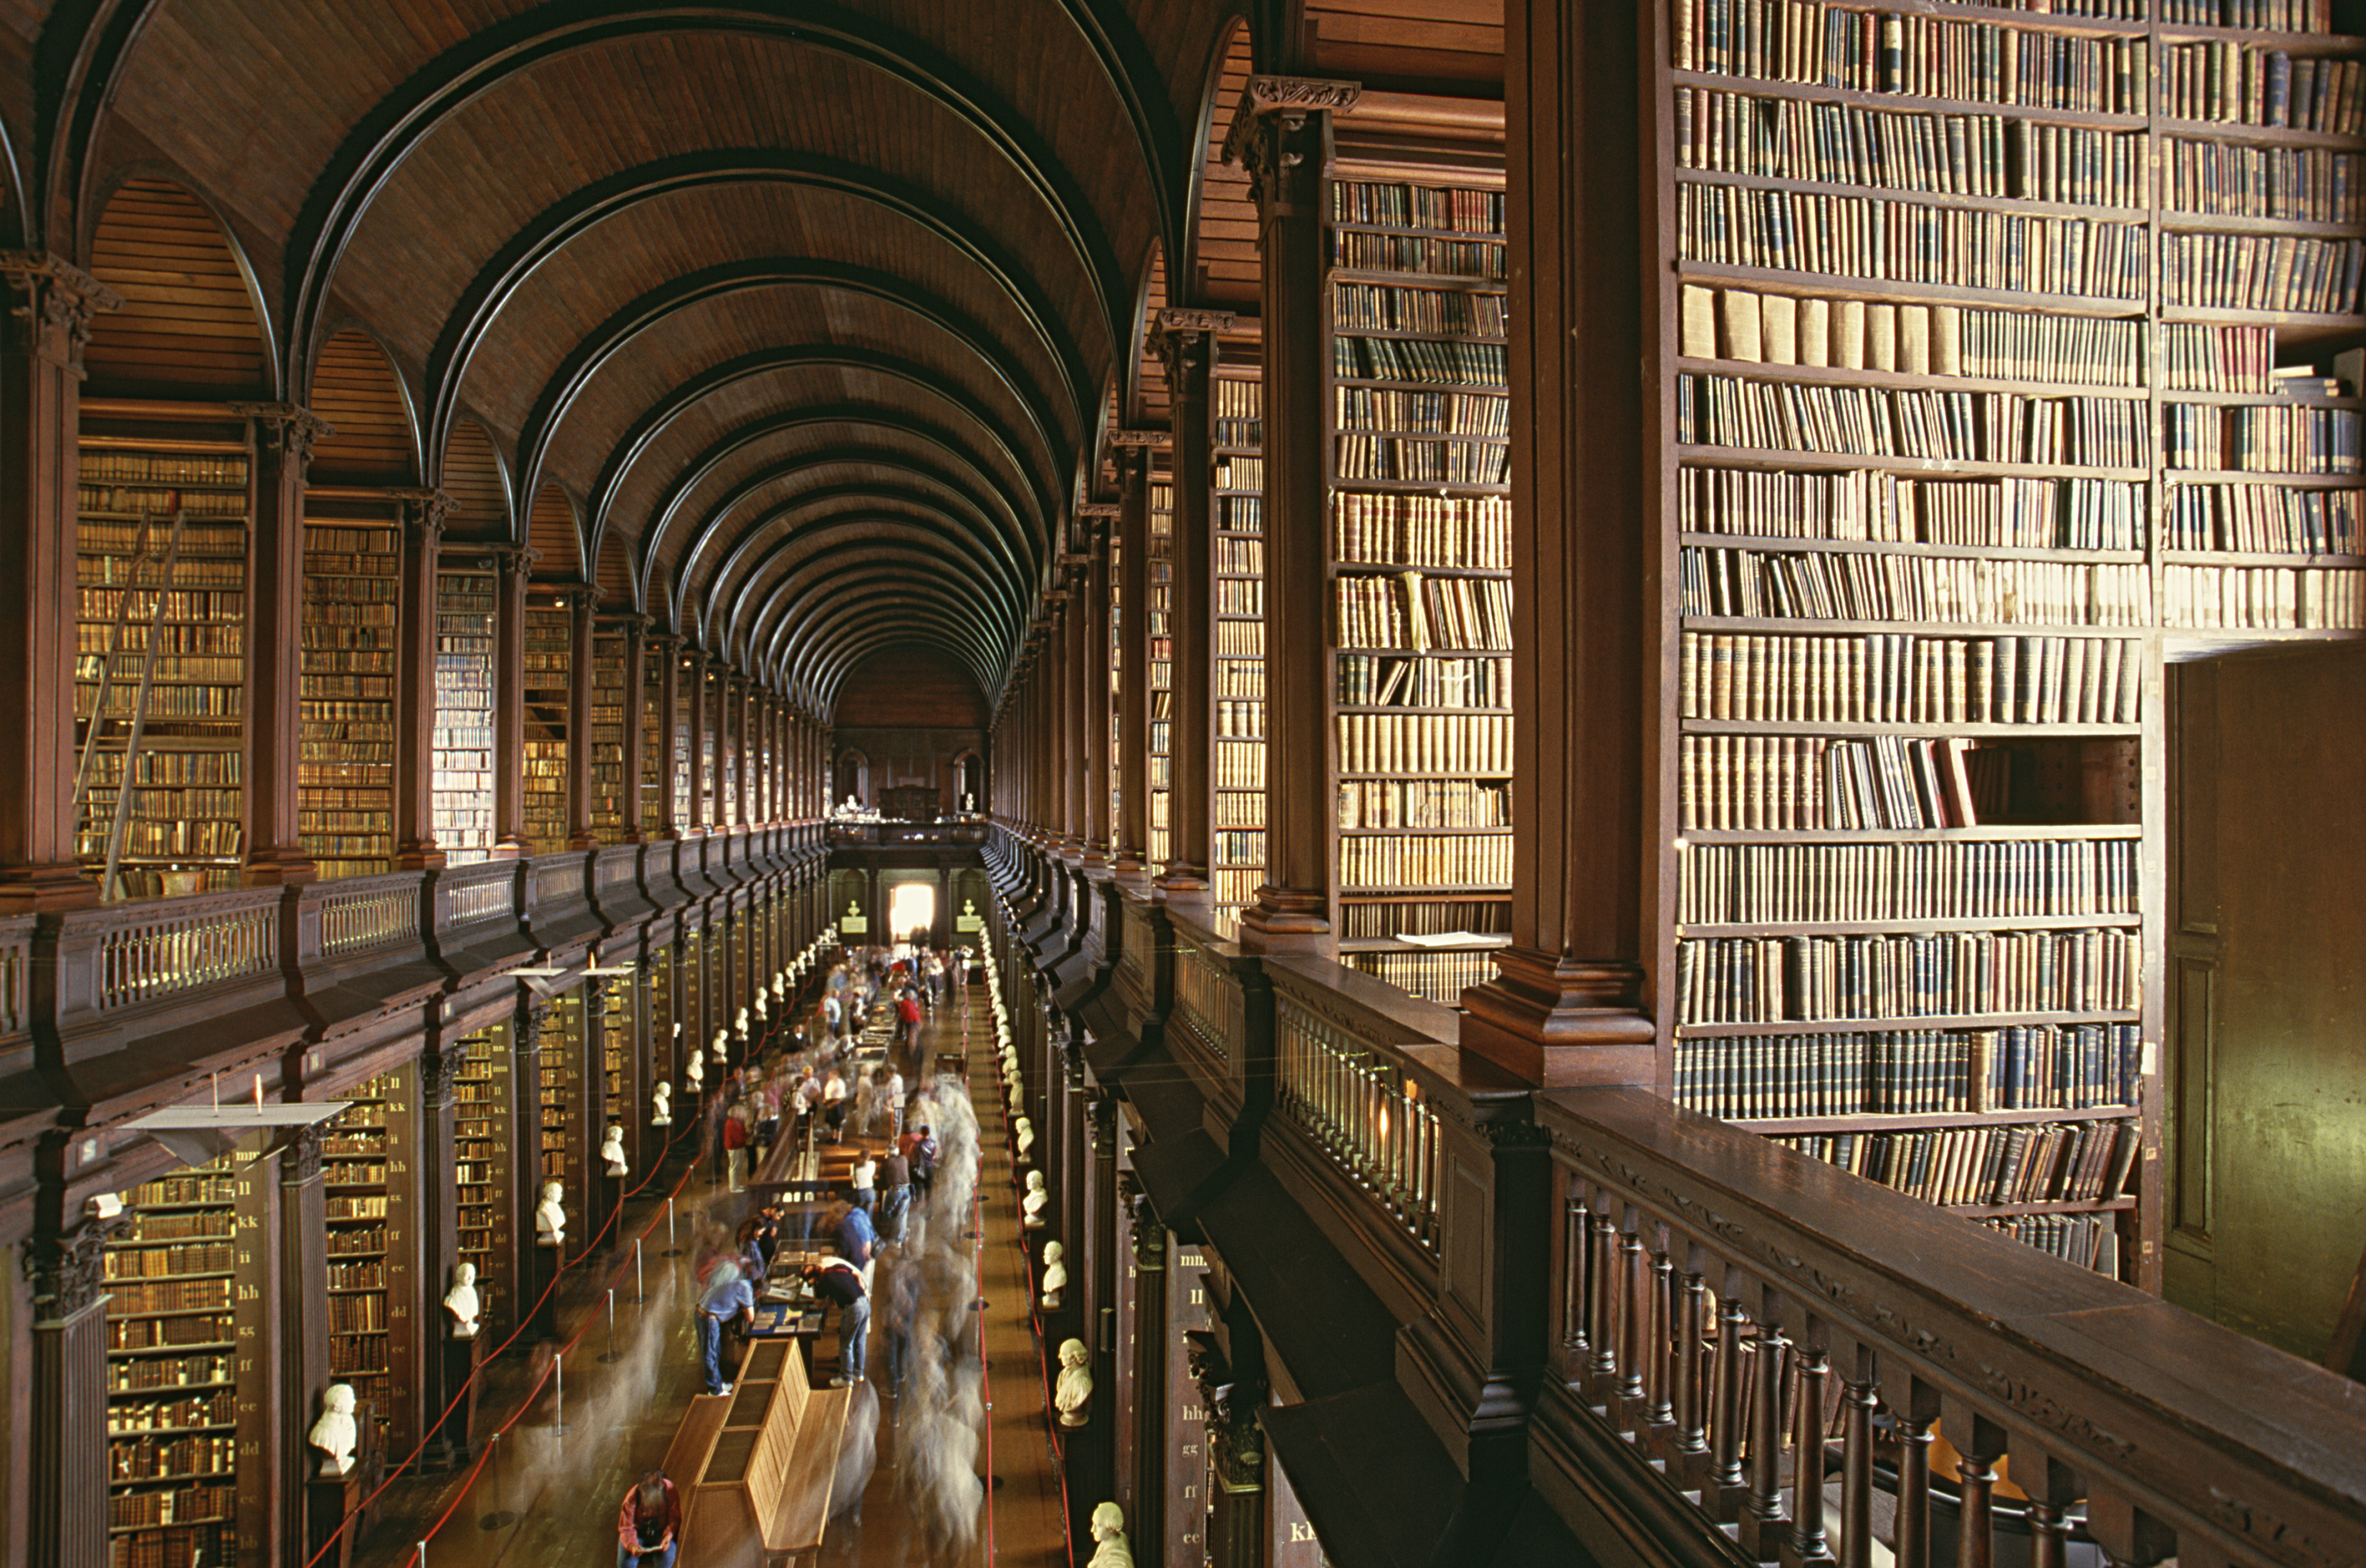 Best world books. Библиотека Тринити-колледжа, Дублин, Ирландия. Библиотека Тринити-колледжа в Дублине. Оксфорд университет библиотека. Библиотека Тринити-колледжа в Кембридже.